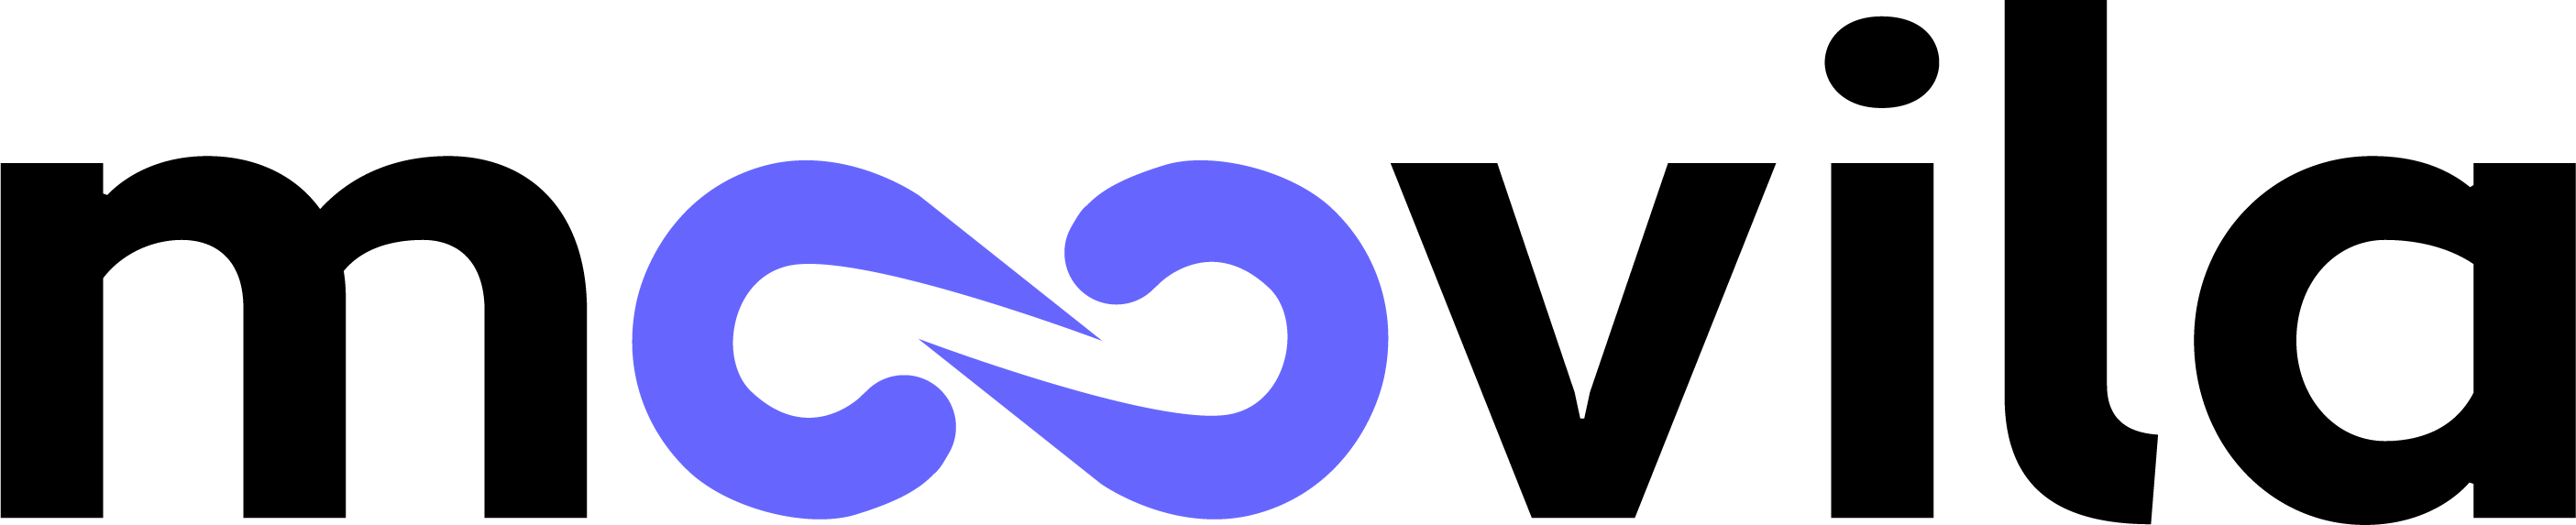 Moovila_Logo_Infinity 2021.png